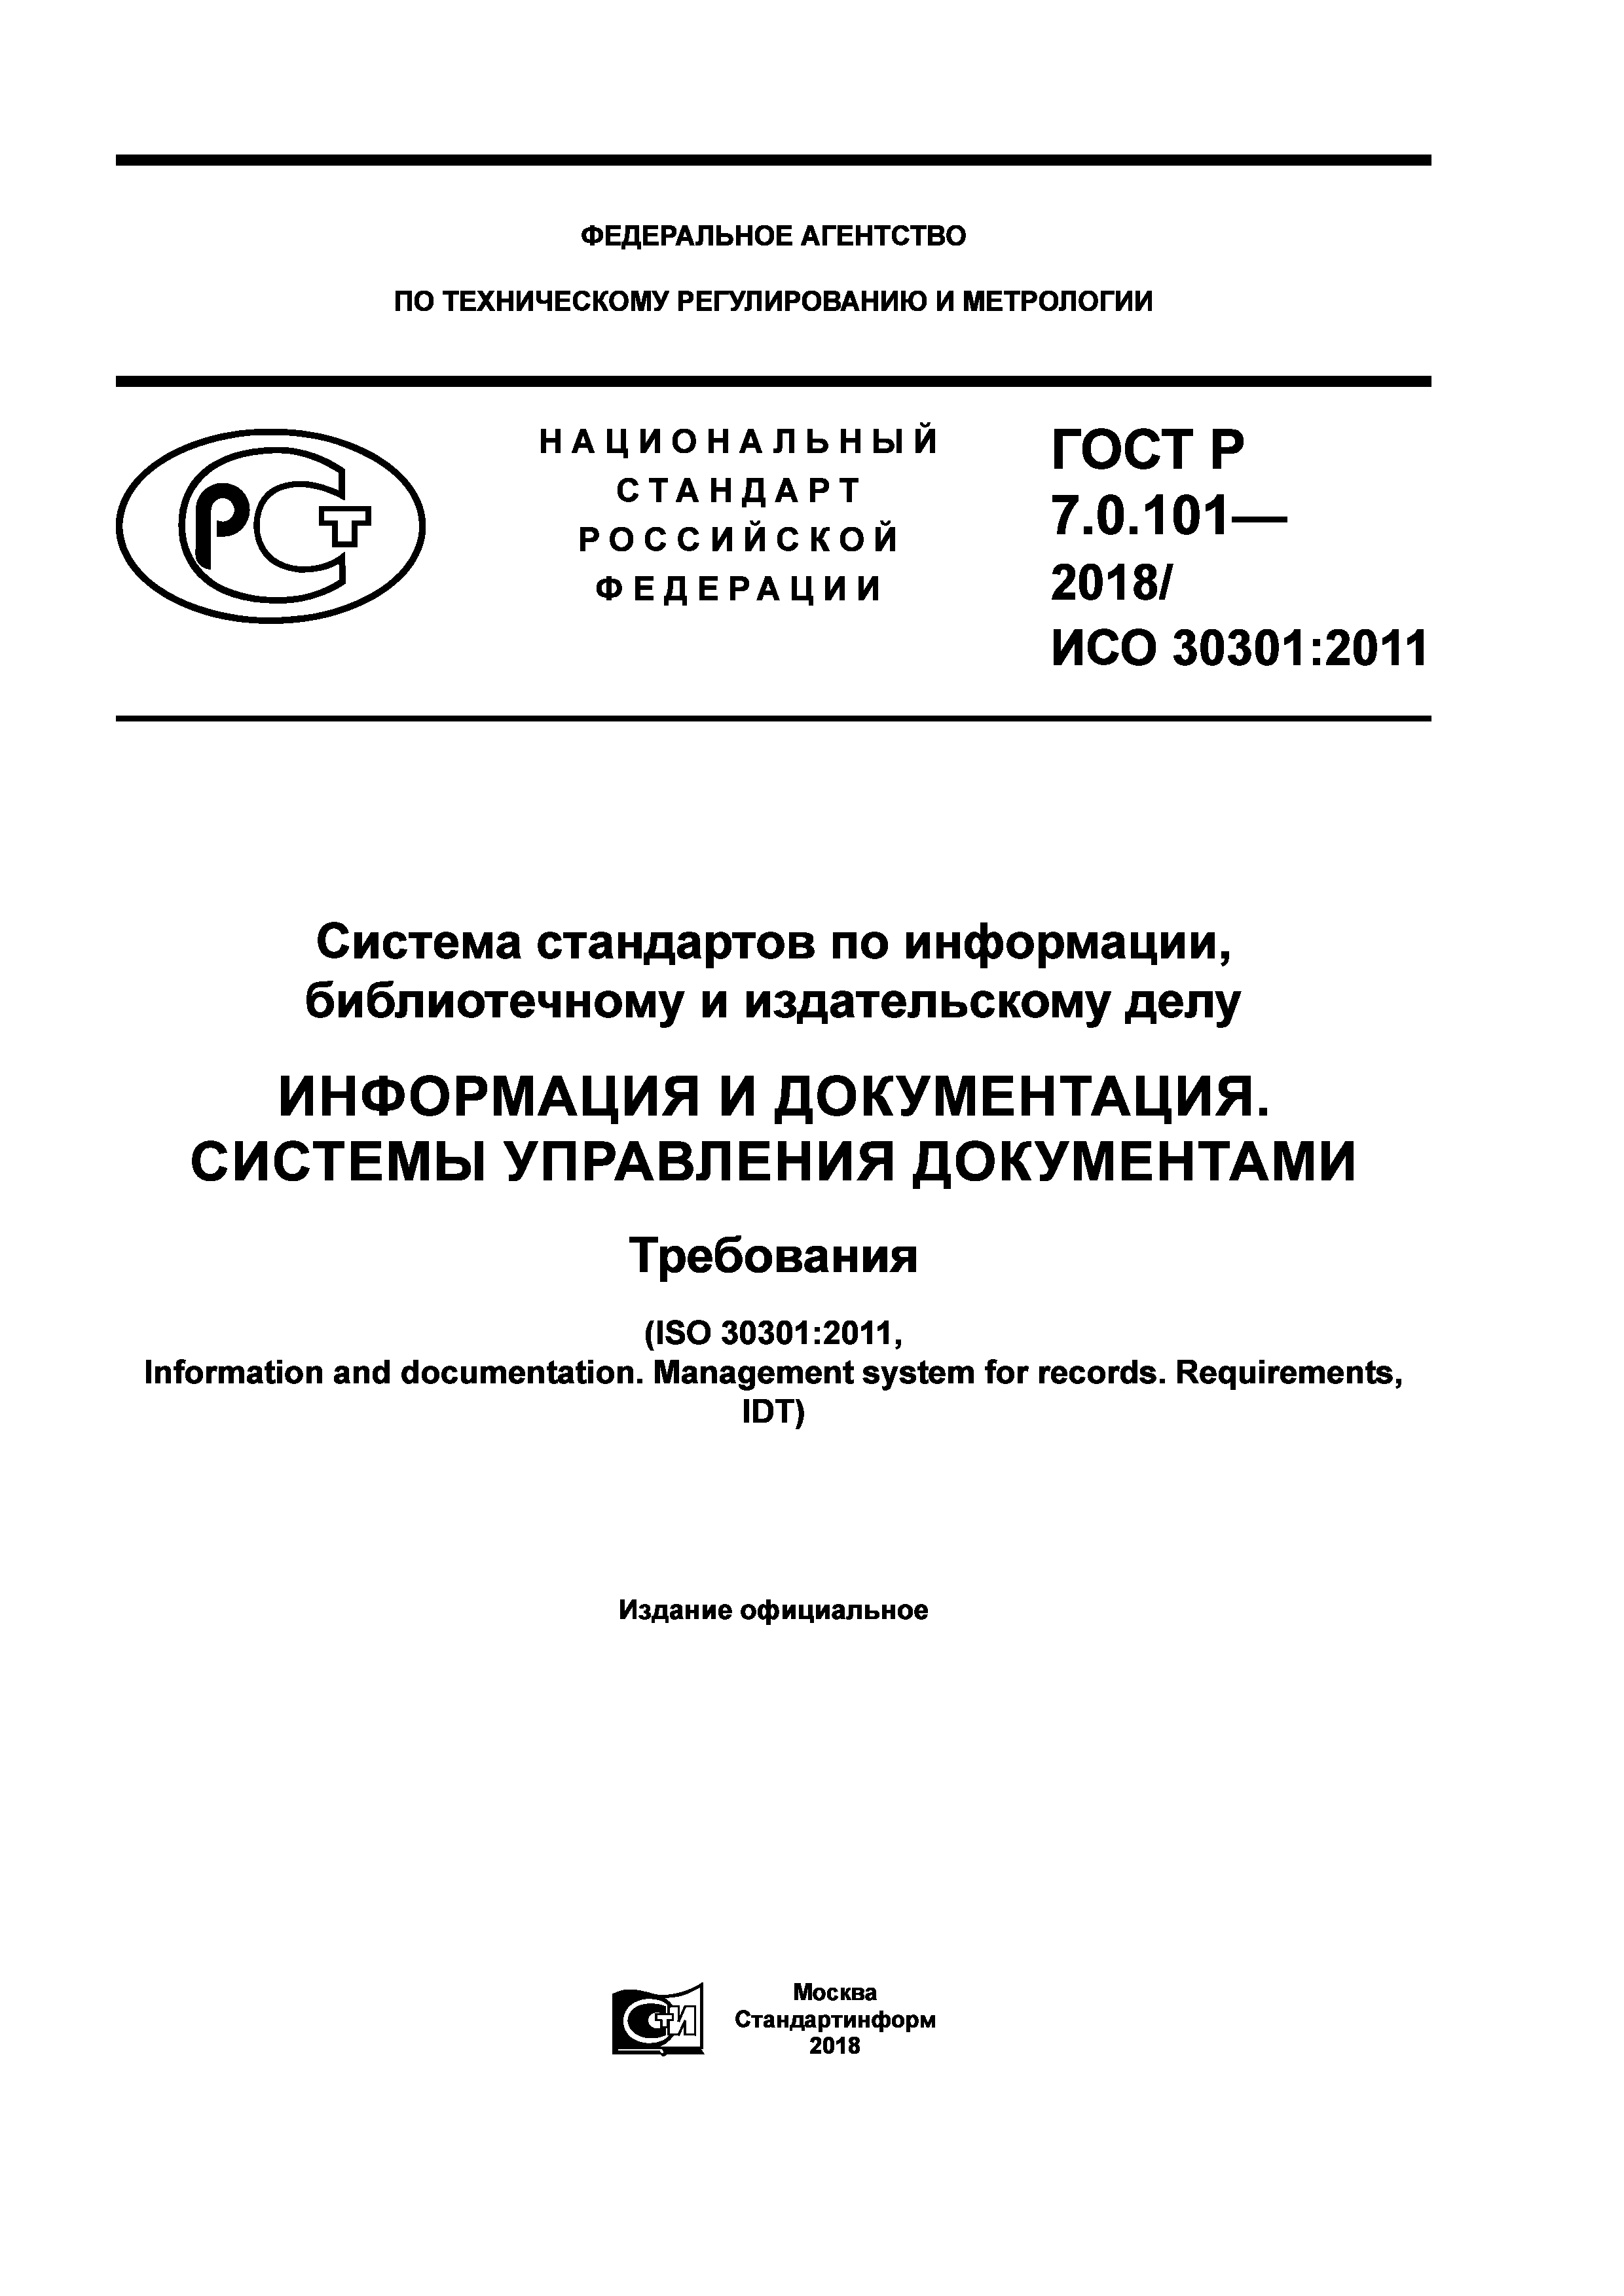 ГОСТ Р 7.0.101-2018